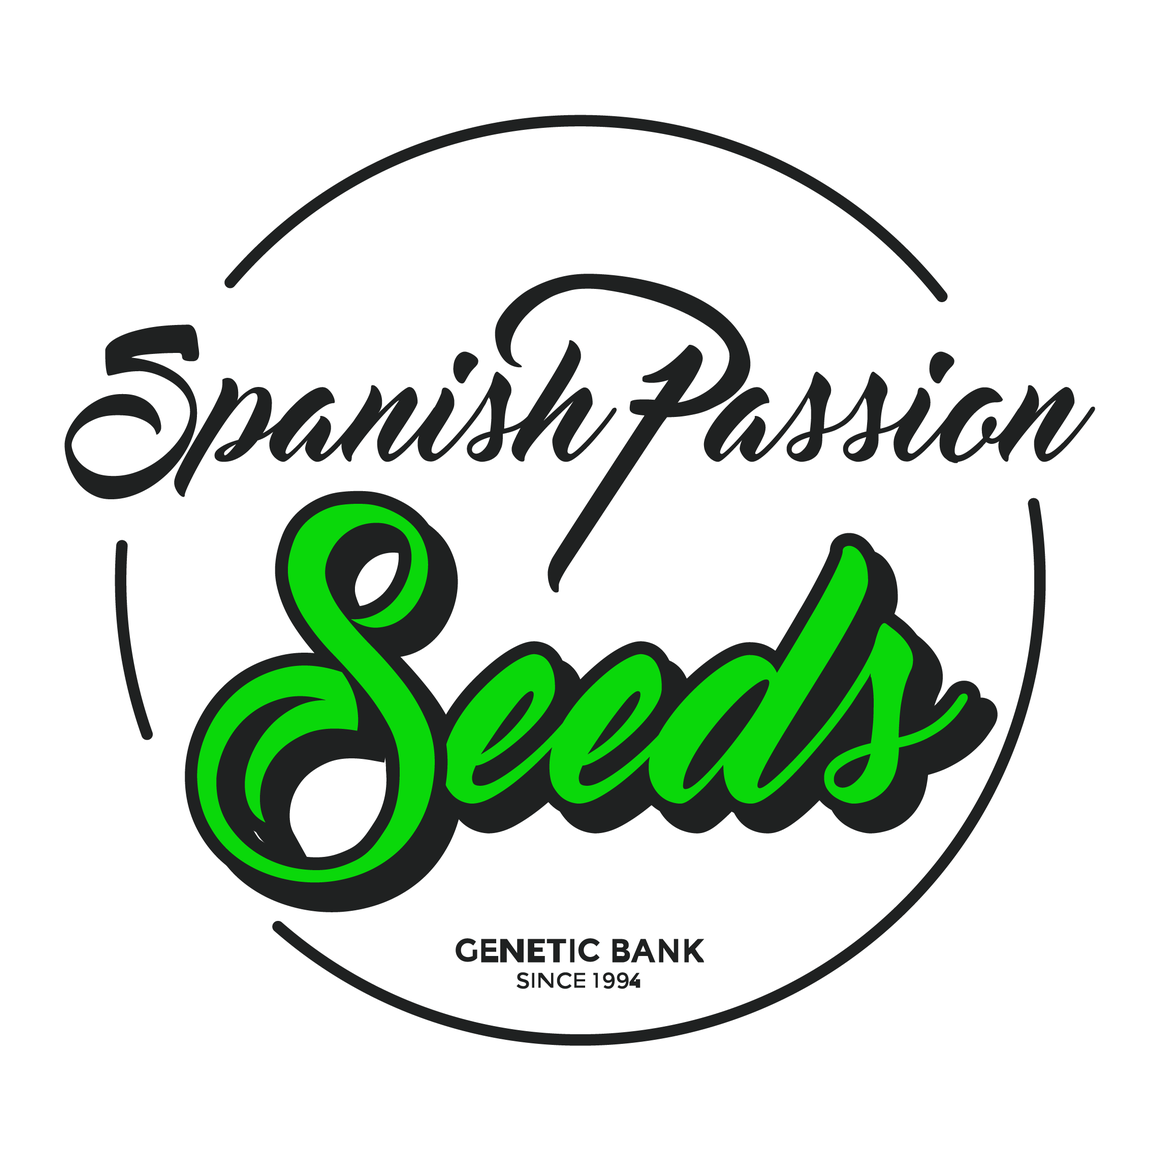 Spanish Passion Seeds Logo